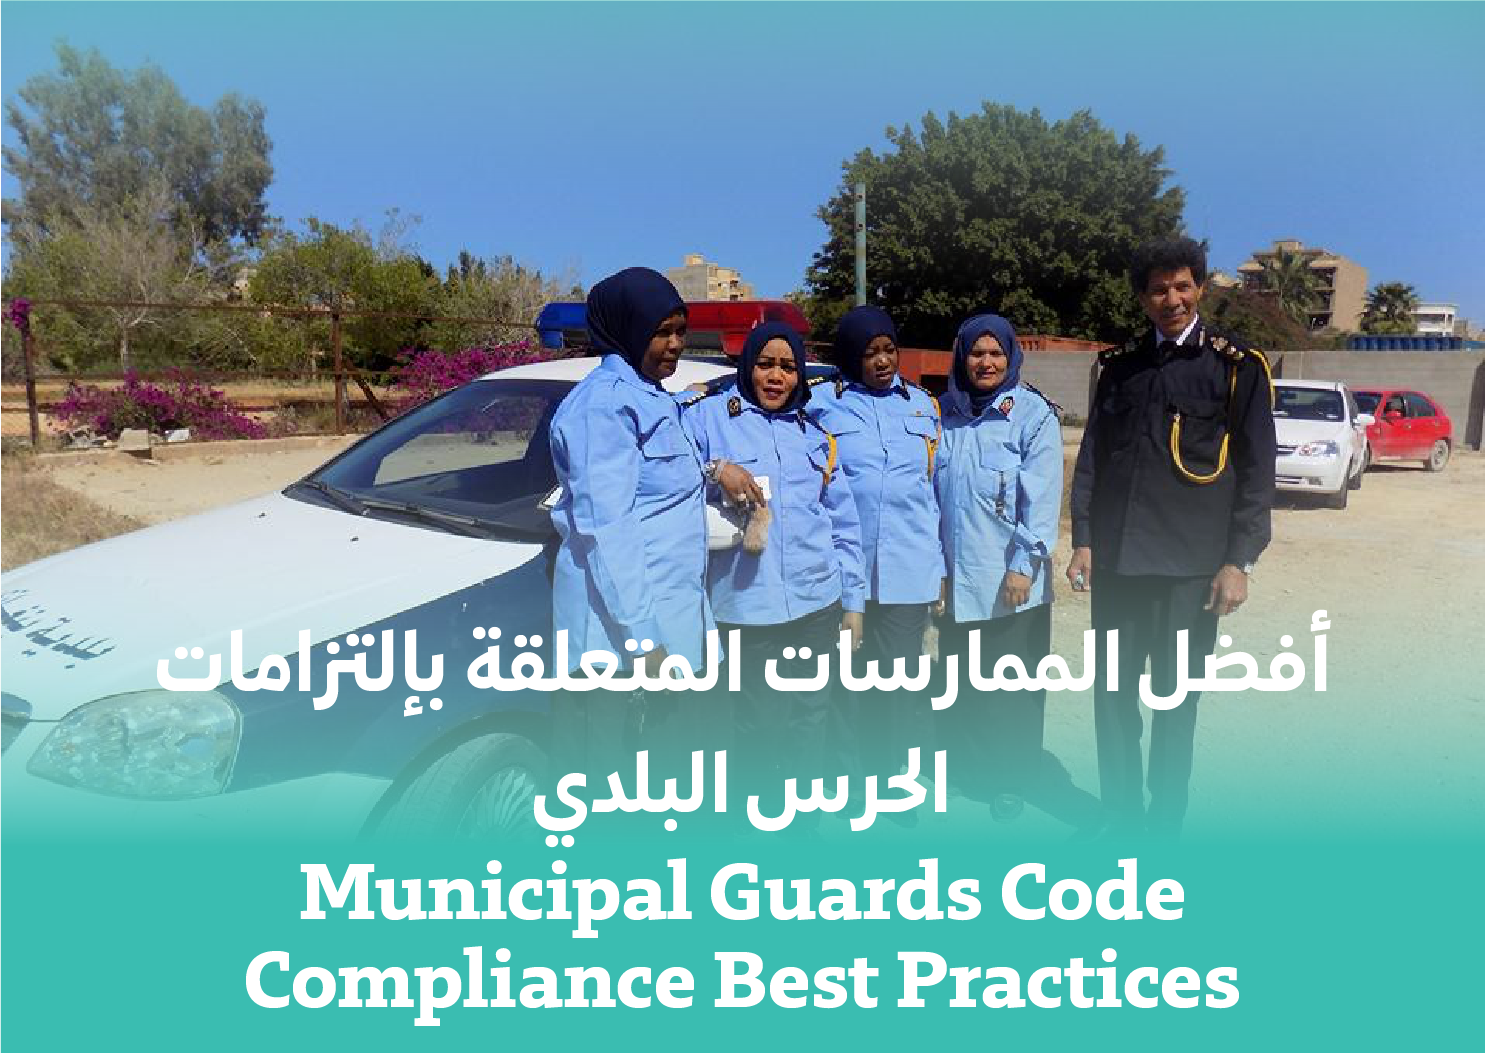 Municipal Guards Code Compliance Best Practices